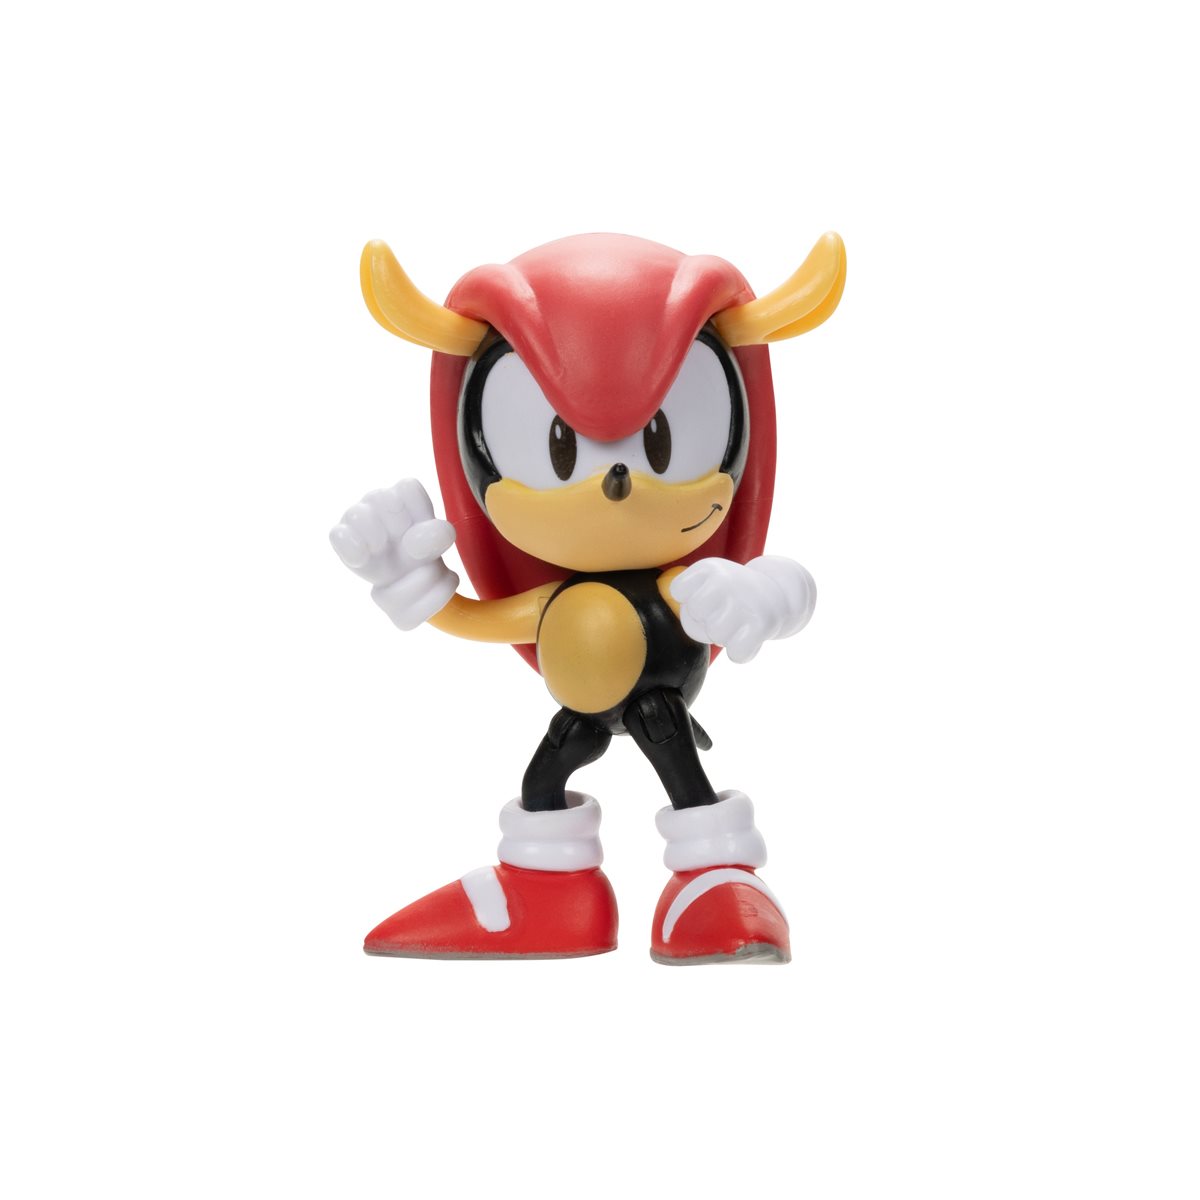 Sonic the hedgehog 2 funko pop figure